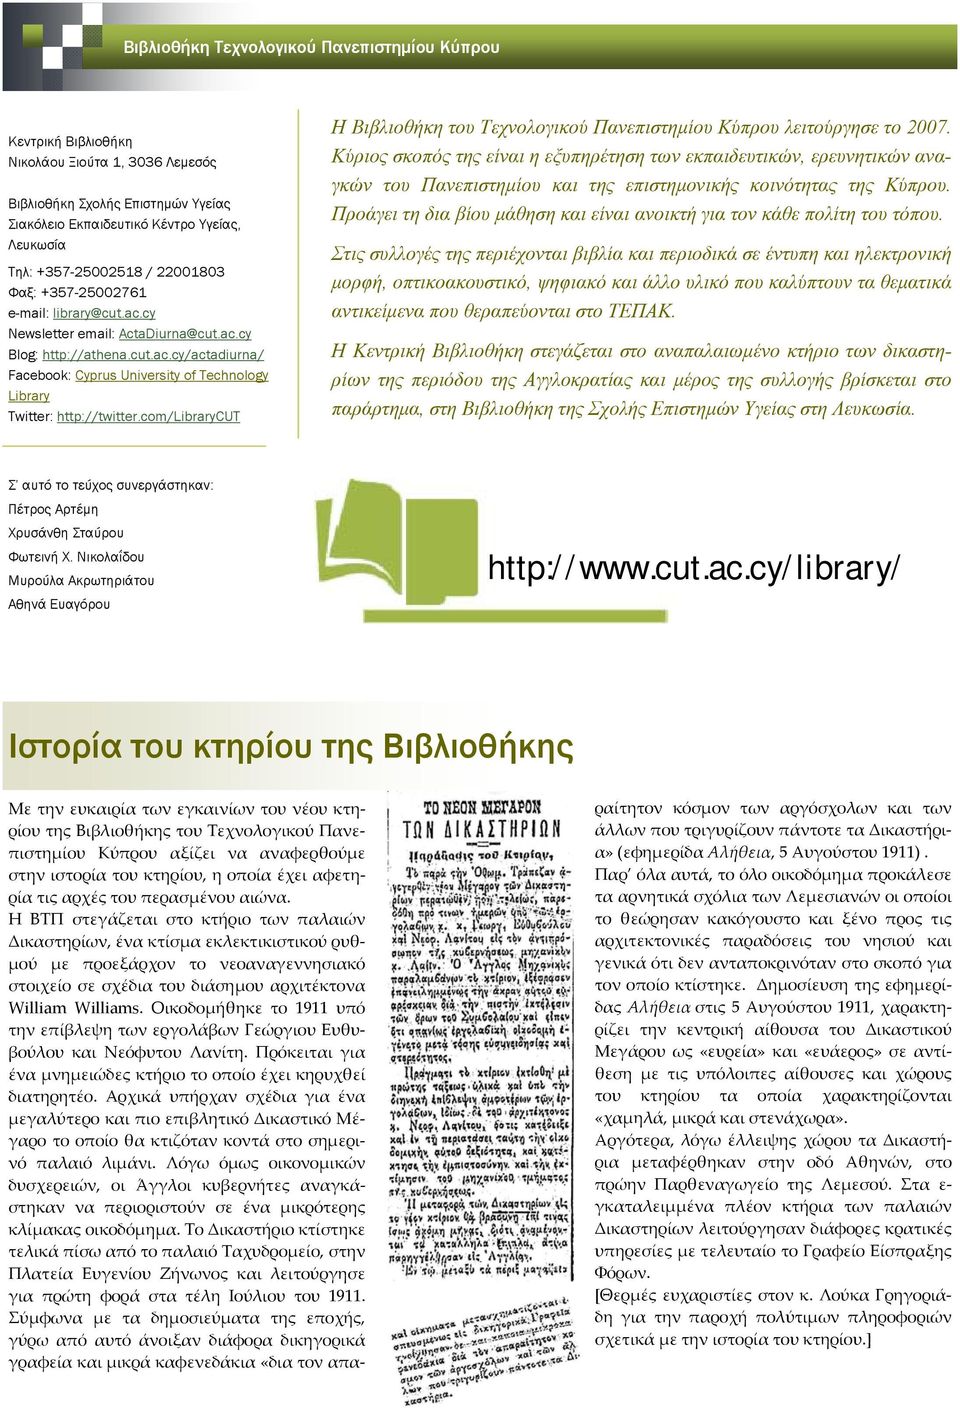 com/librarycut Η Βιβλιοθήκη του Τεχνολογικού Πανεπιστημίου Κύπρου λειτούργησε το 2007.